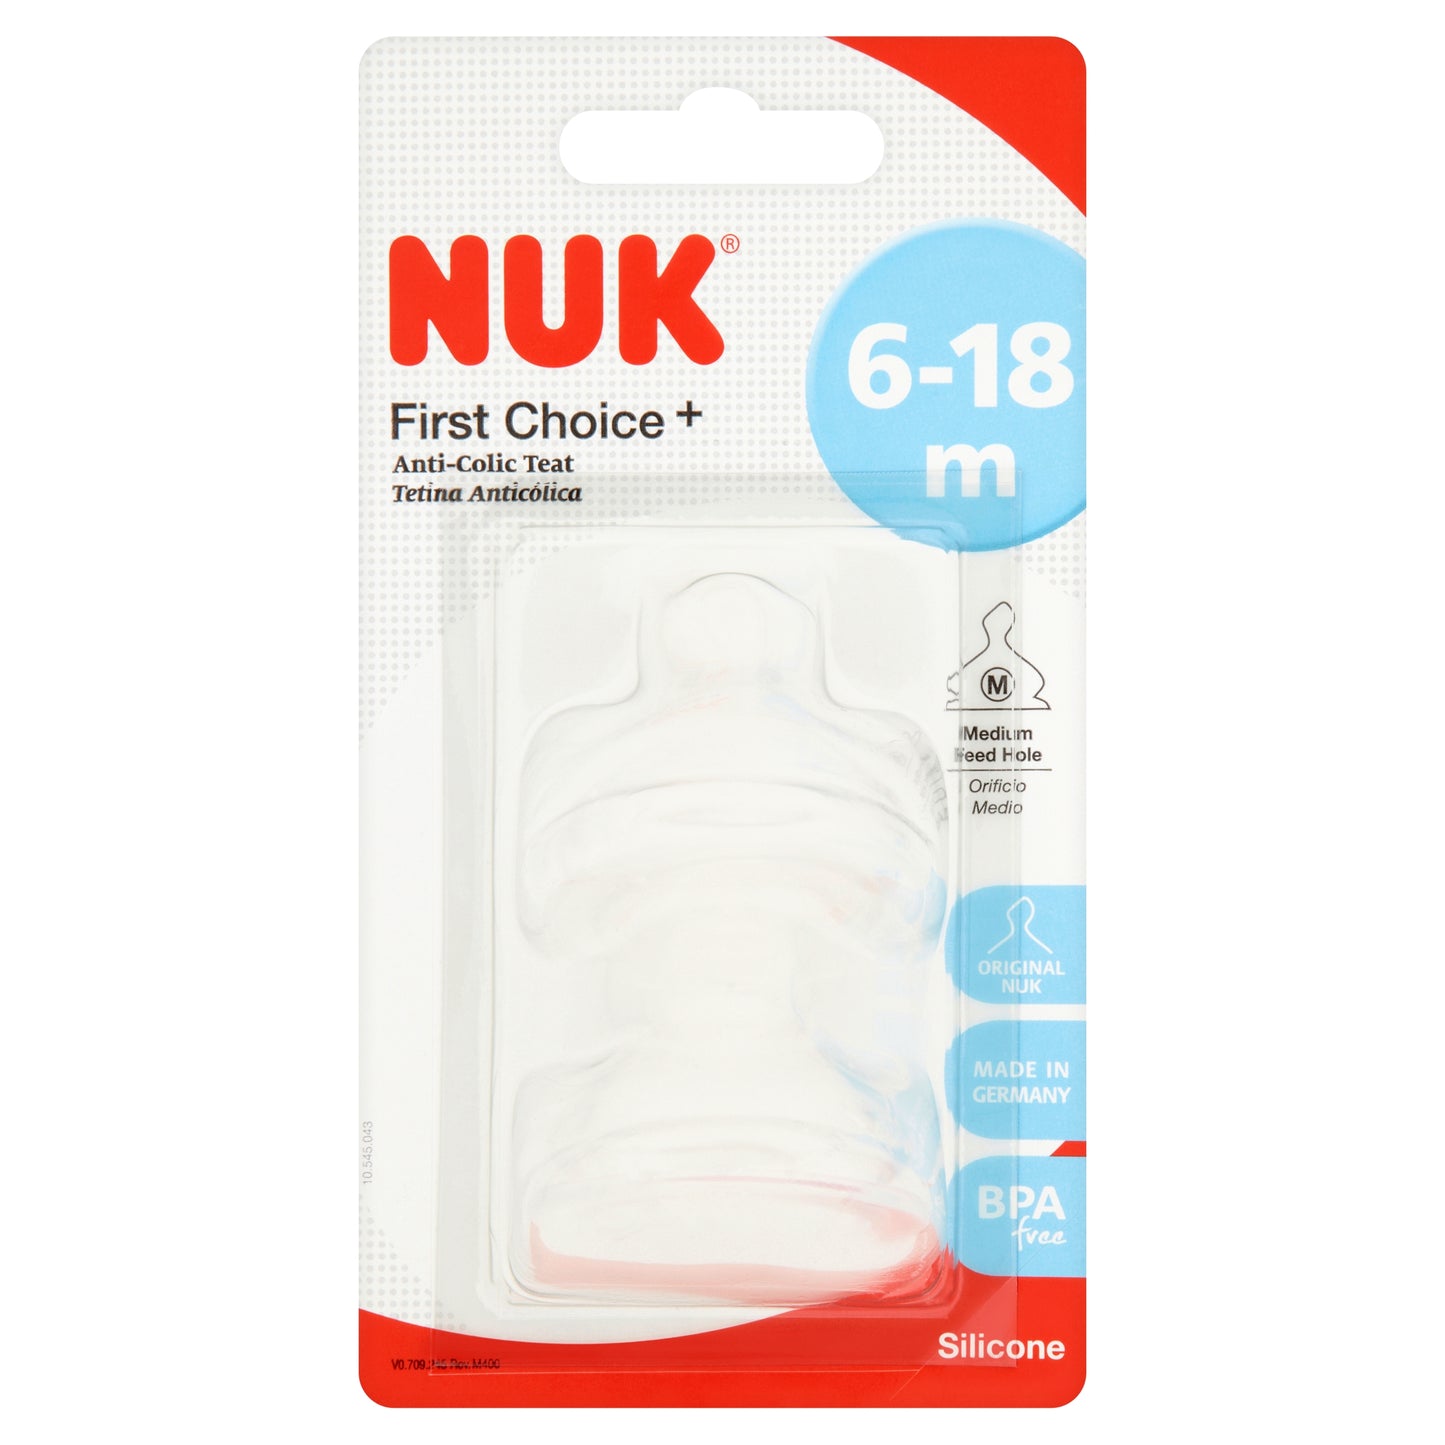 NUK First Choice+ Silicone Teat 6-18m Medium 2Pk at Baby City